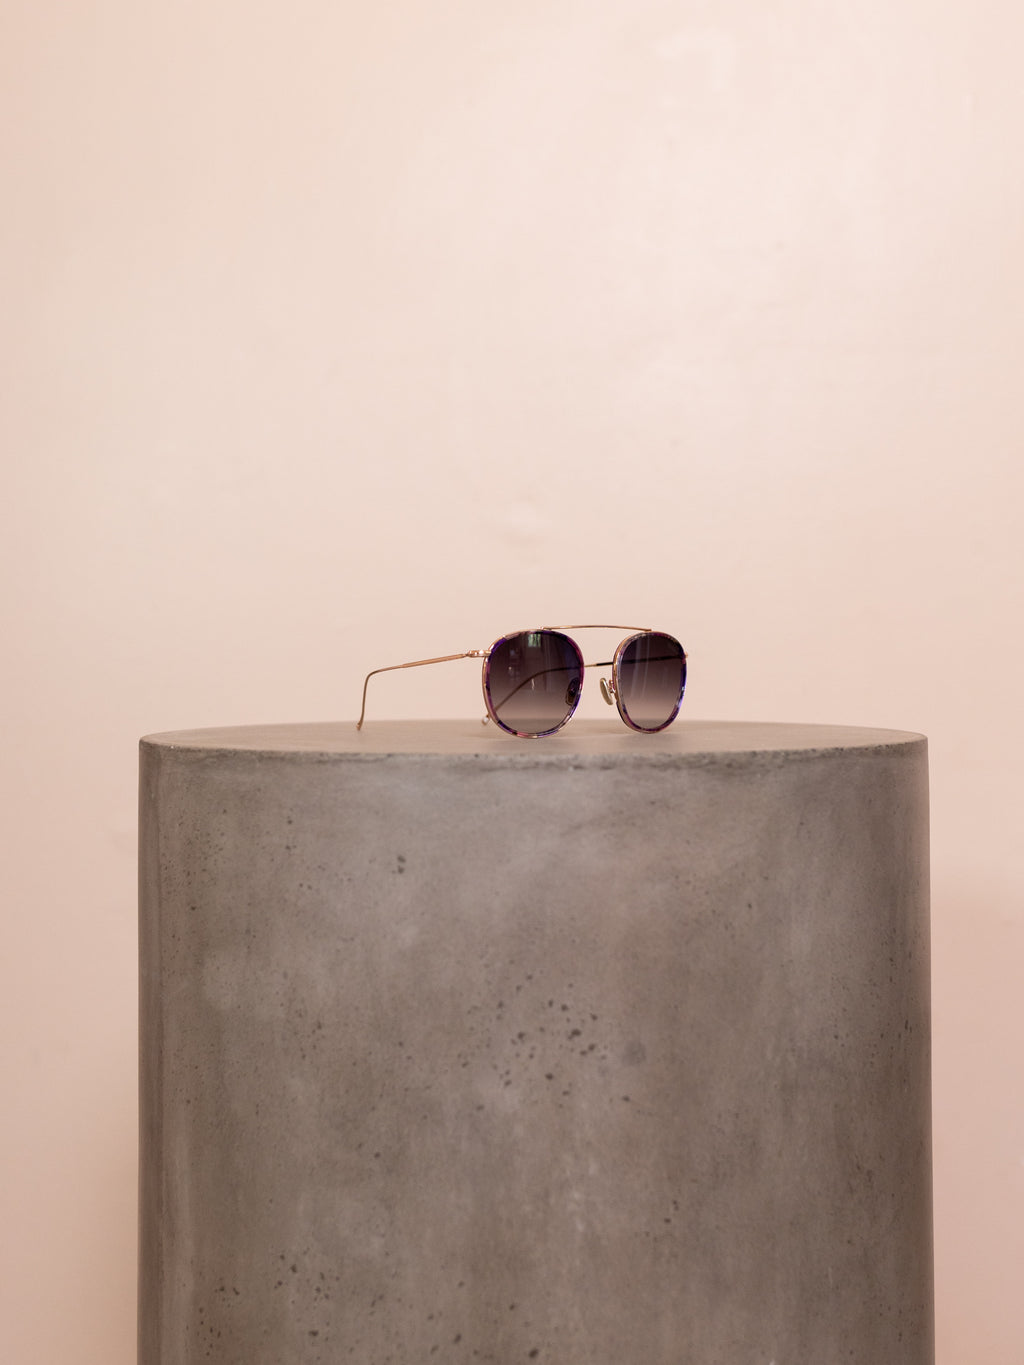 Wire framed sunglasses on pedestal against pink background